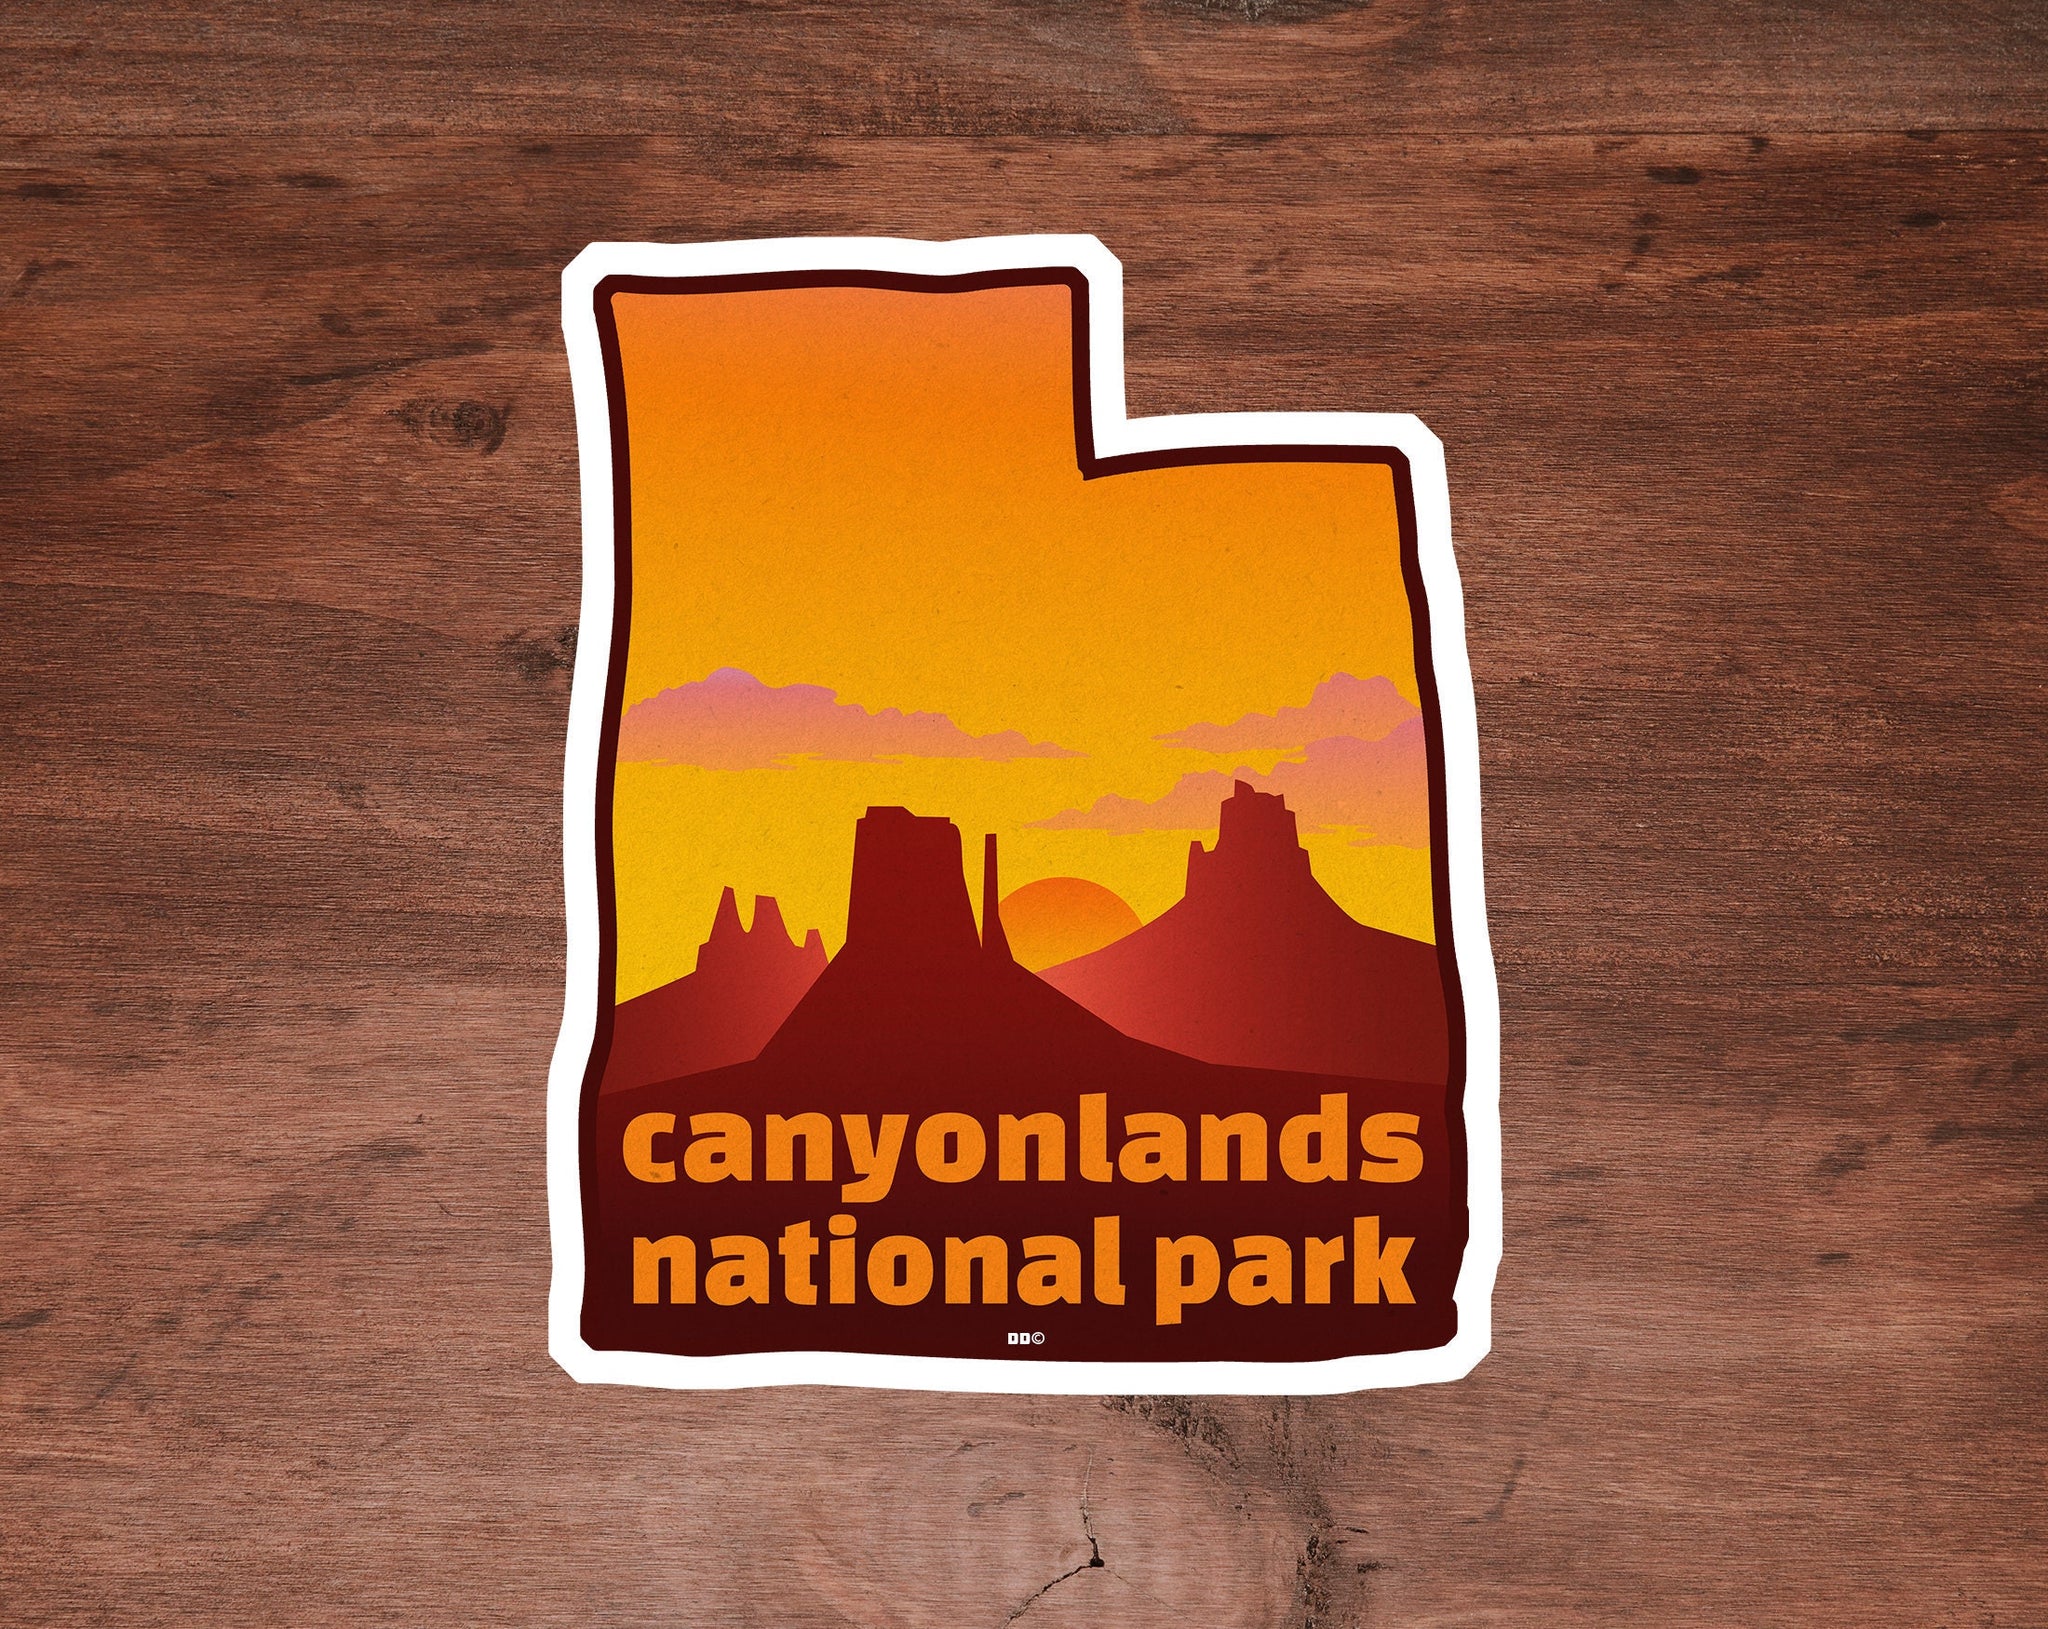 Canyonlands National Park Utah Sticker Decal 2.75" x 3.5"